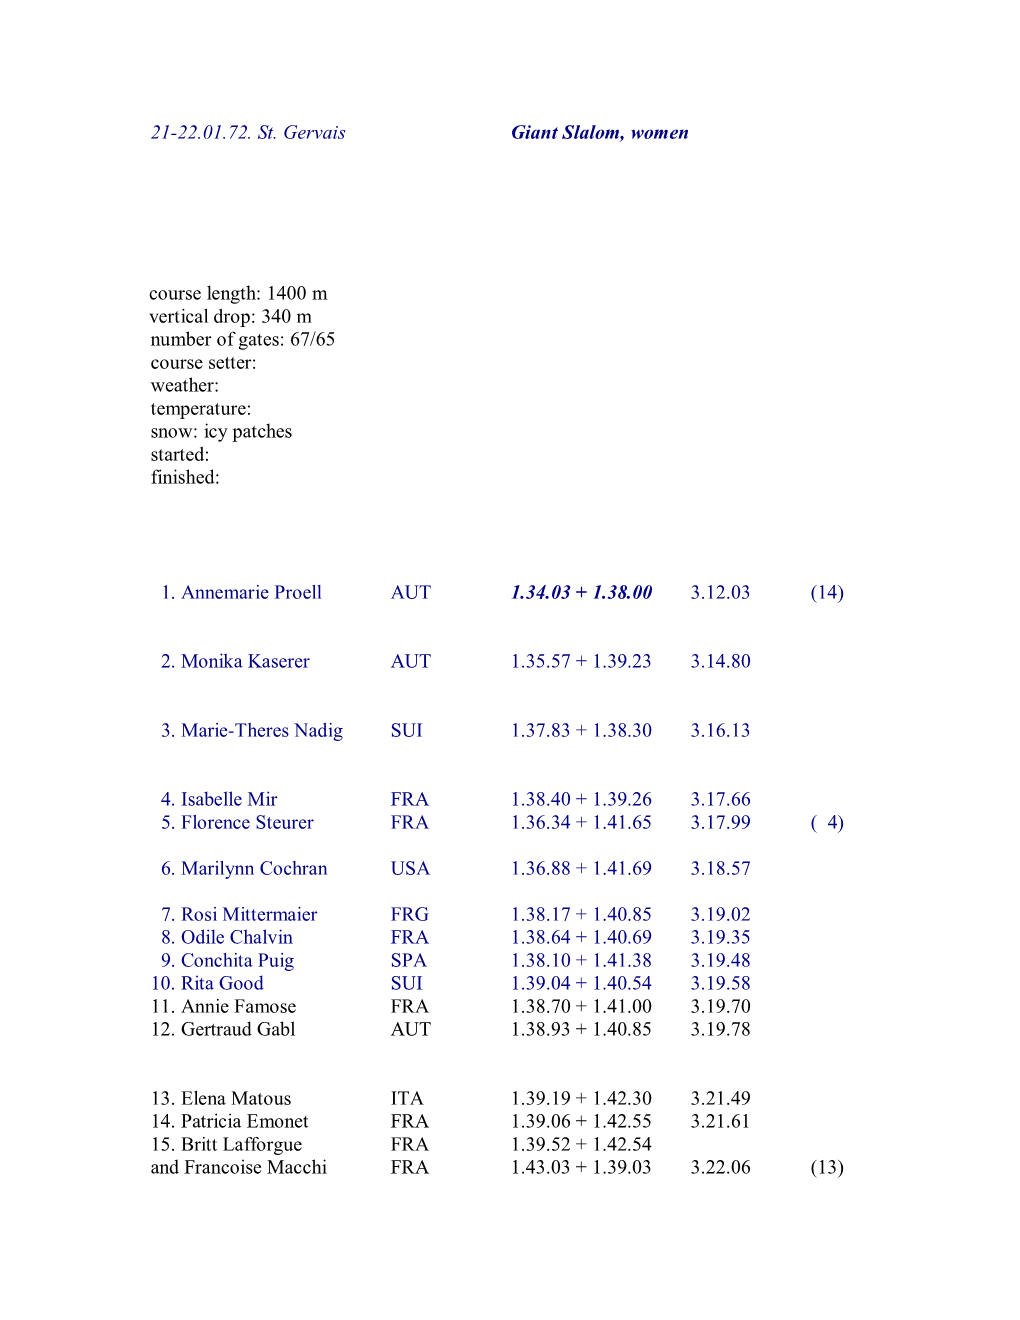 21-22.01.72. St. Gervais Giant Slalom, Women Course Length: 1400